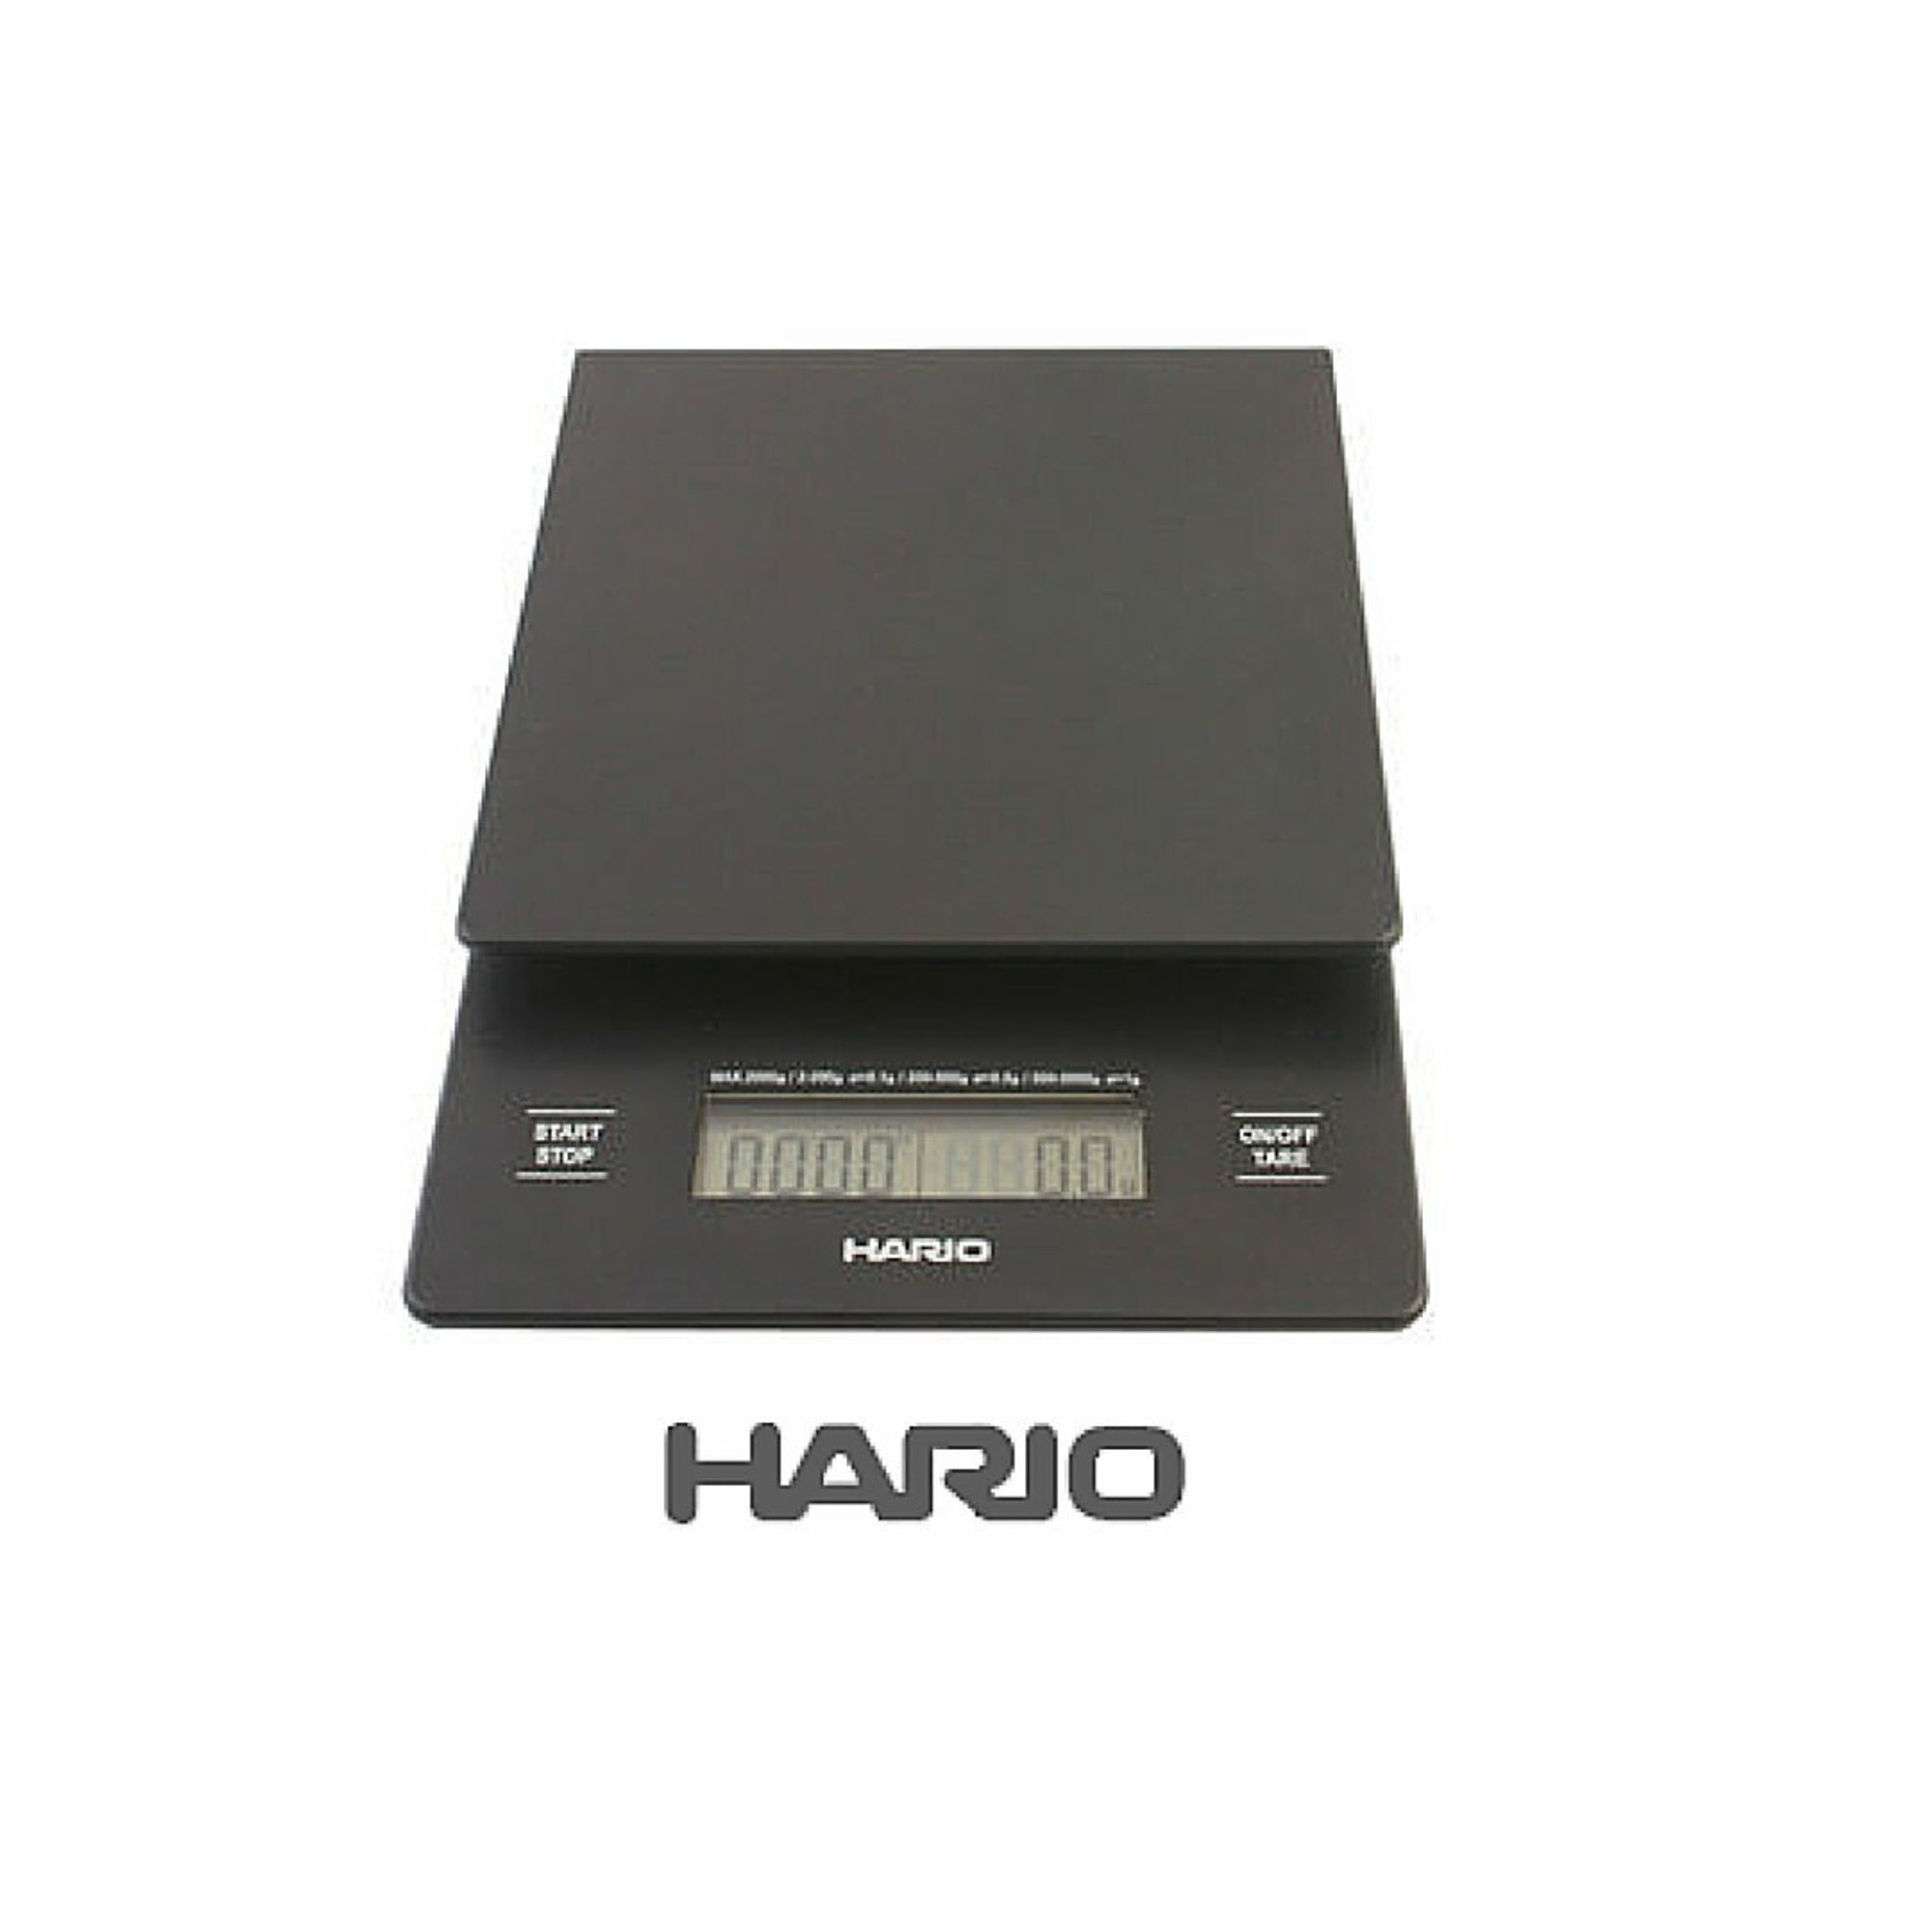 Hario Scale